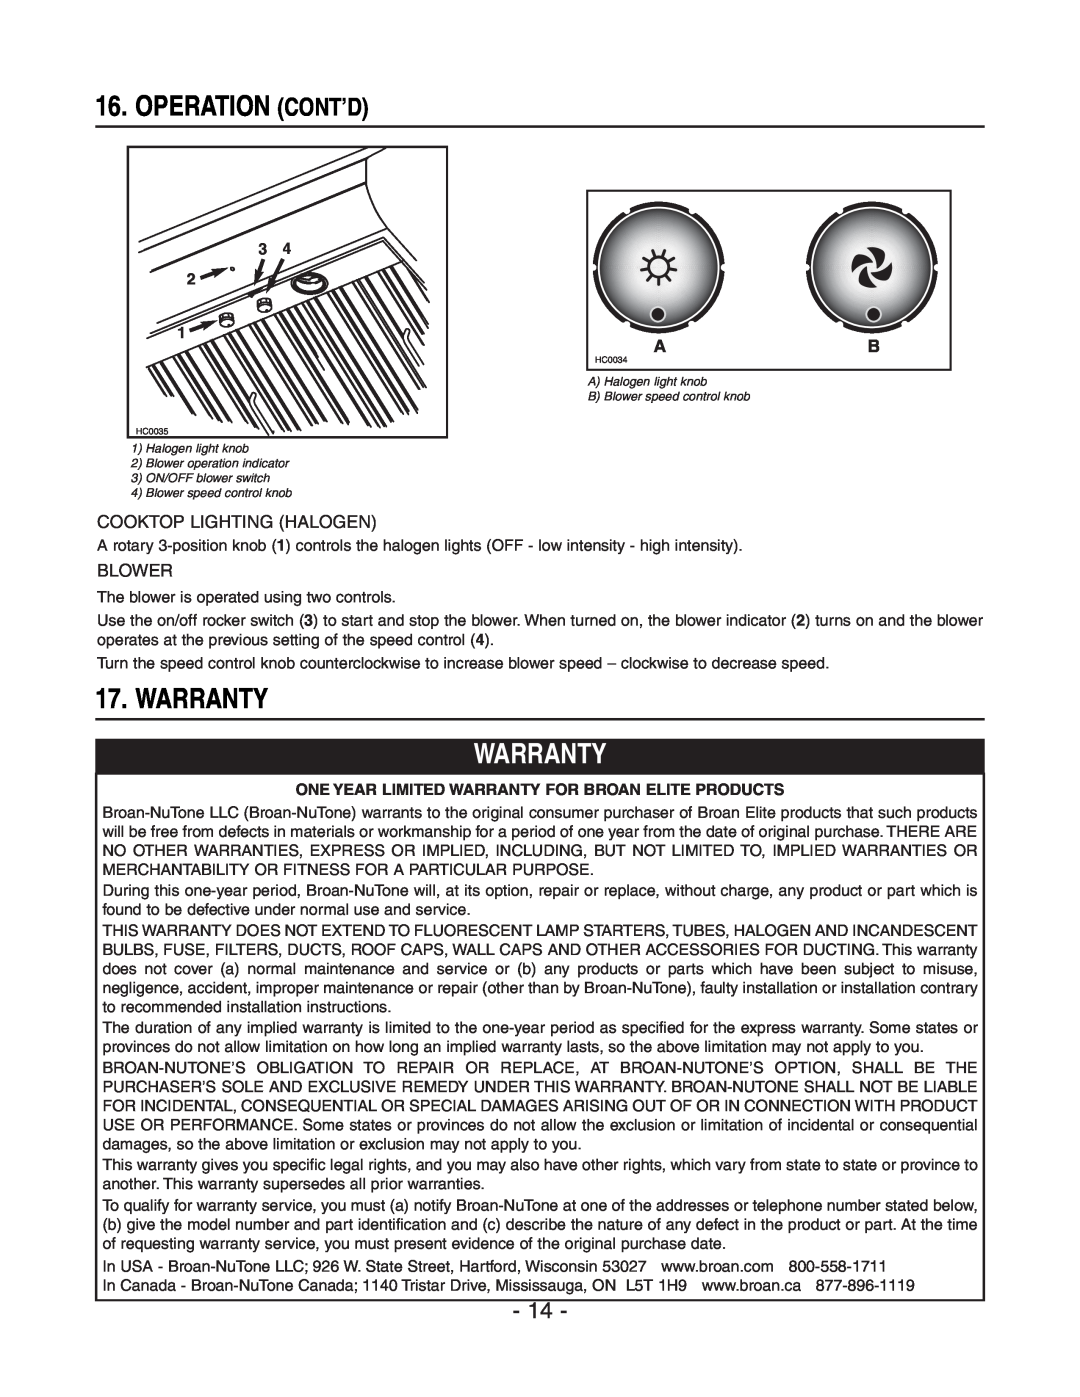 Rangemaster E64000, E6448SS installation instructions Warranty, Operation Cont’D, Cooktop Lighting Halogen, Blower 